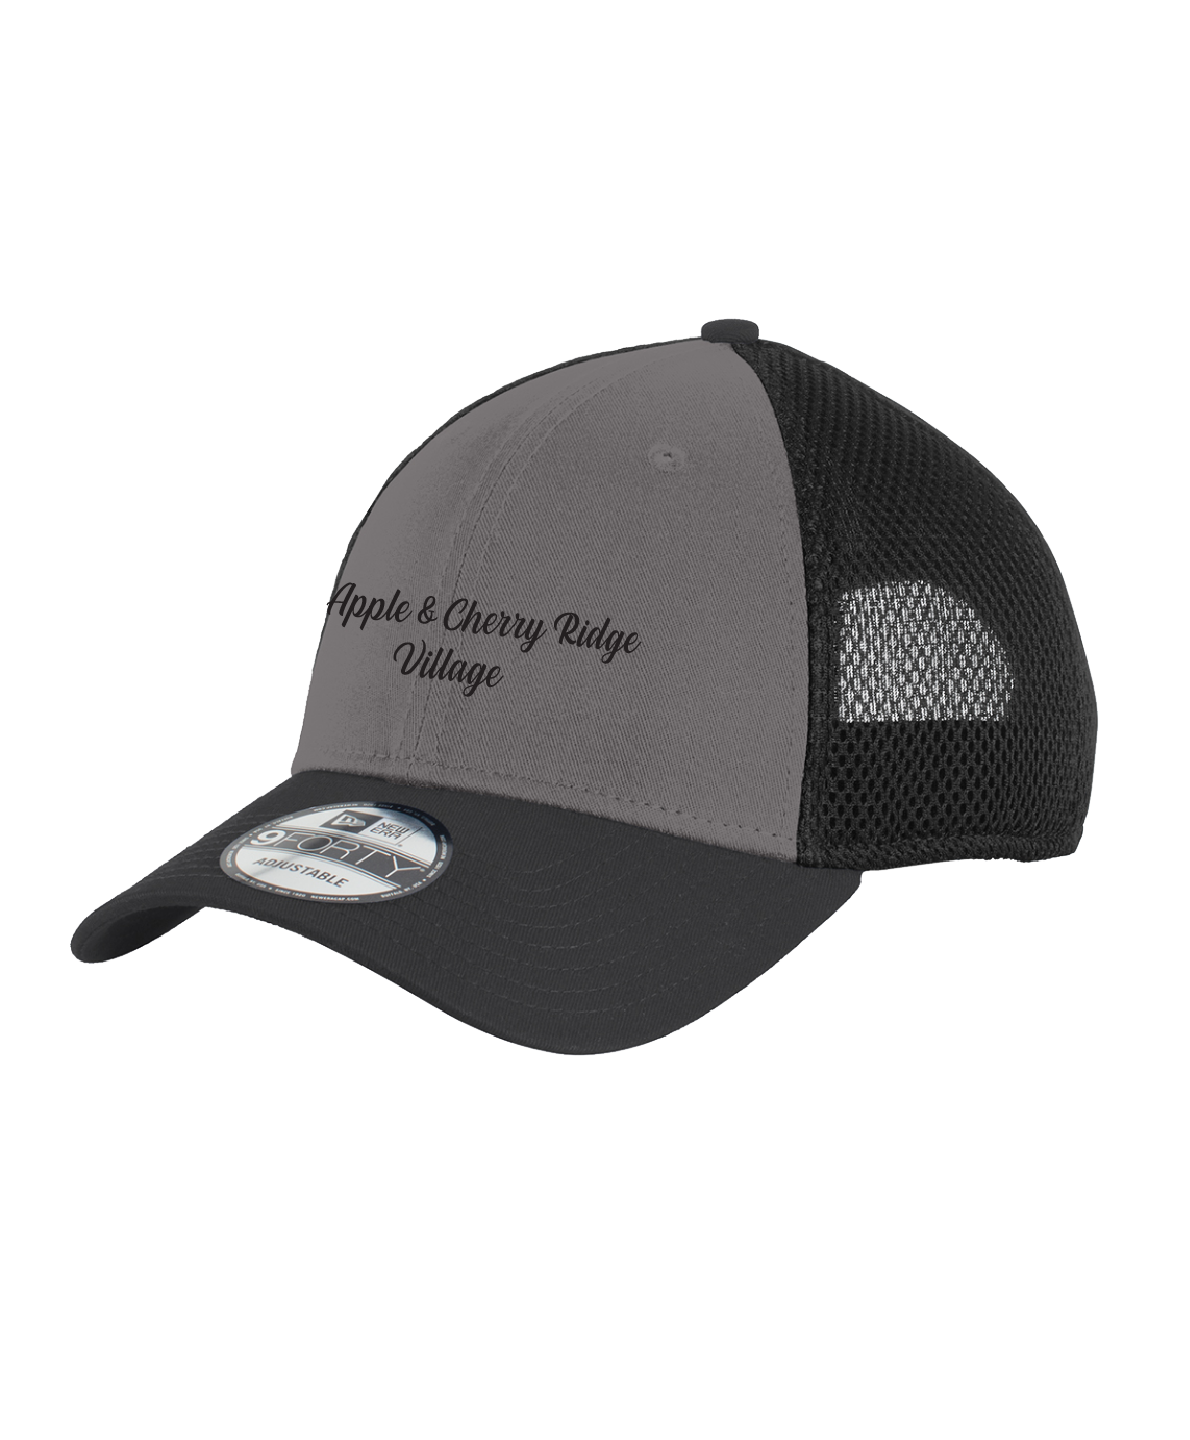 Apple & Cherry Ridge Village - New Era® - Snapback Contrast Front Mesh Cap